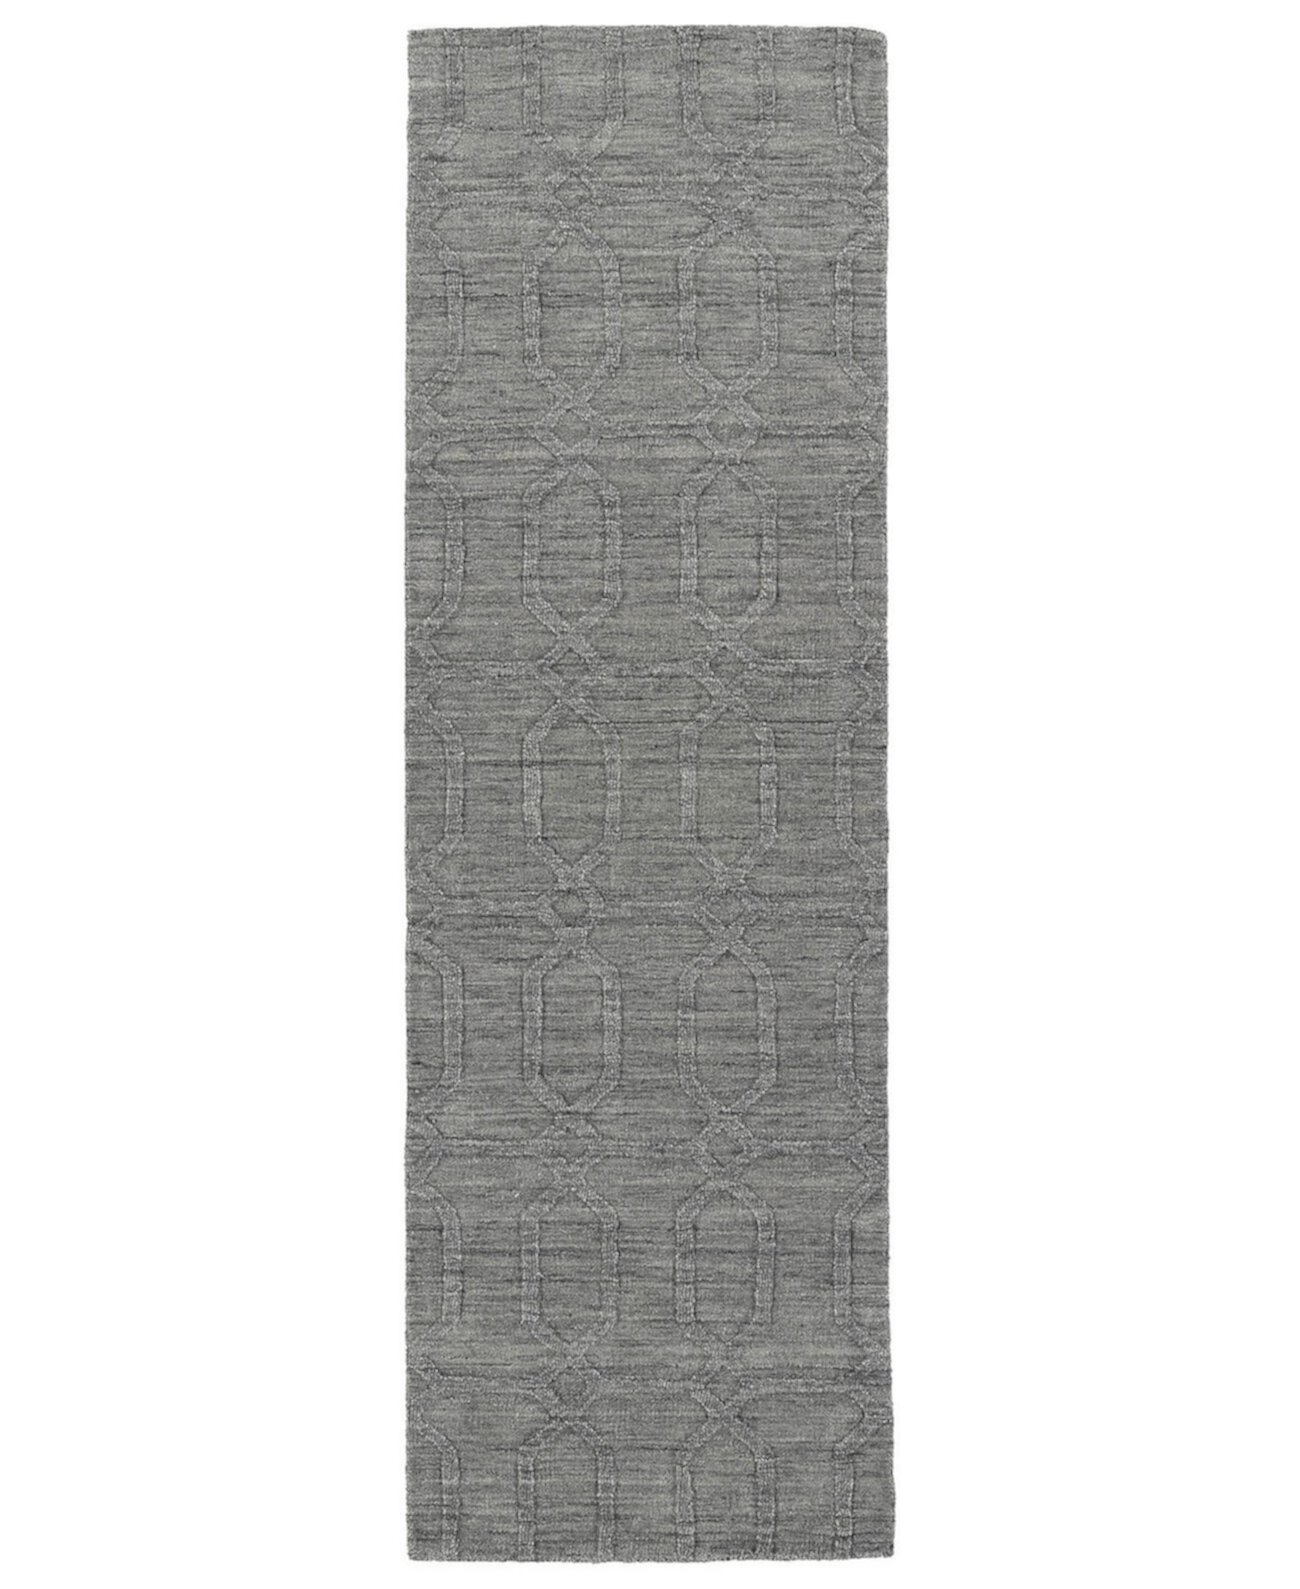 Imprints Modern IPM03-75 Серый коврик для дорожки размером 2 фута 6 x 8 футов Kaleen